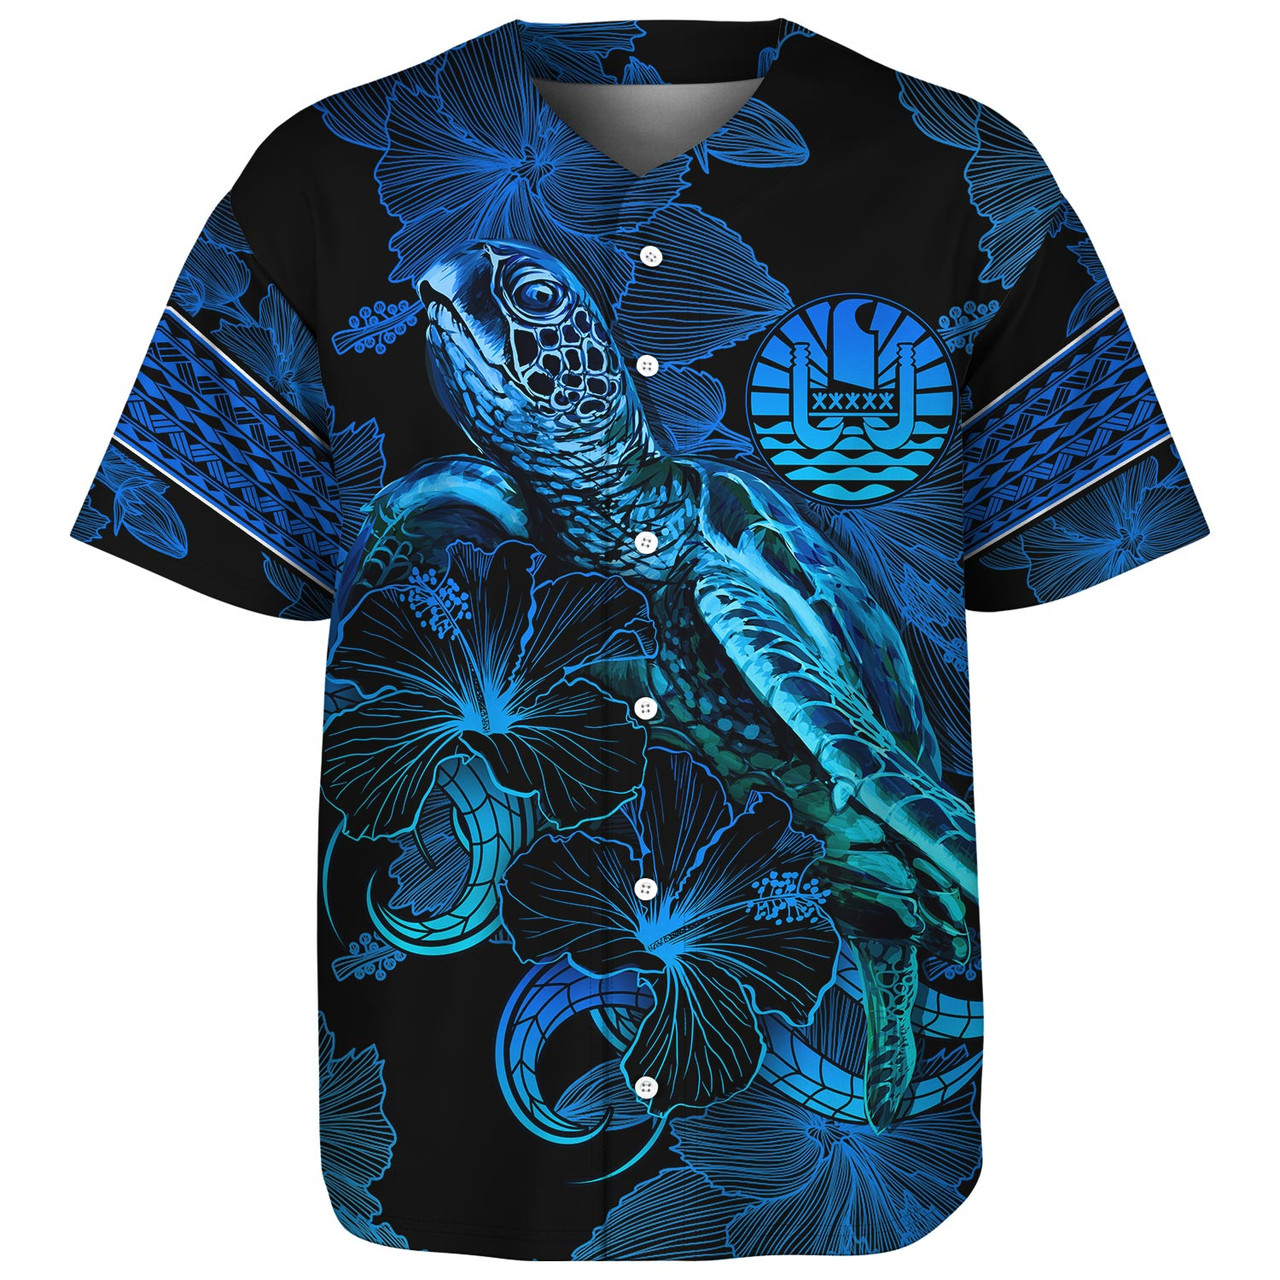 Tahiti Baseball Shirt Sea Turtle With Blooming Hibiscus Flowers Tribal Blue